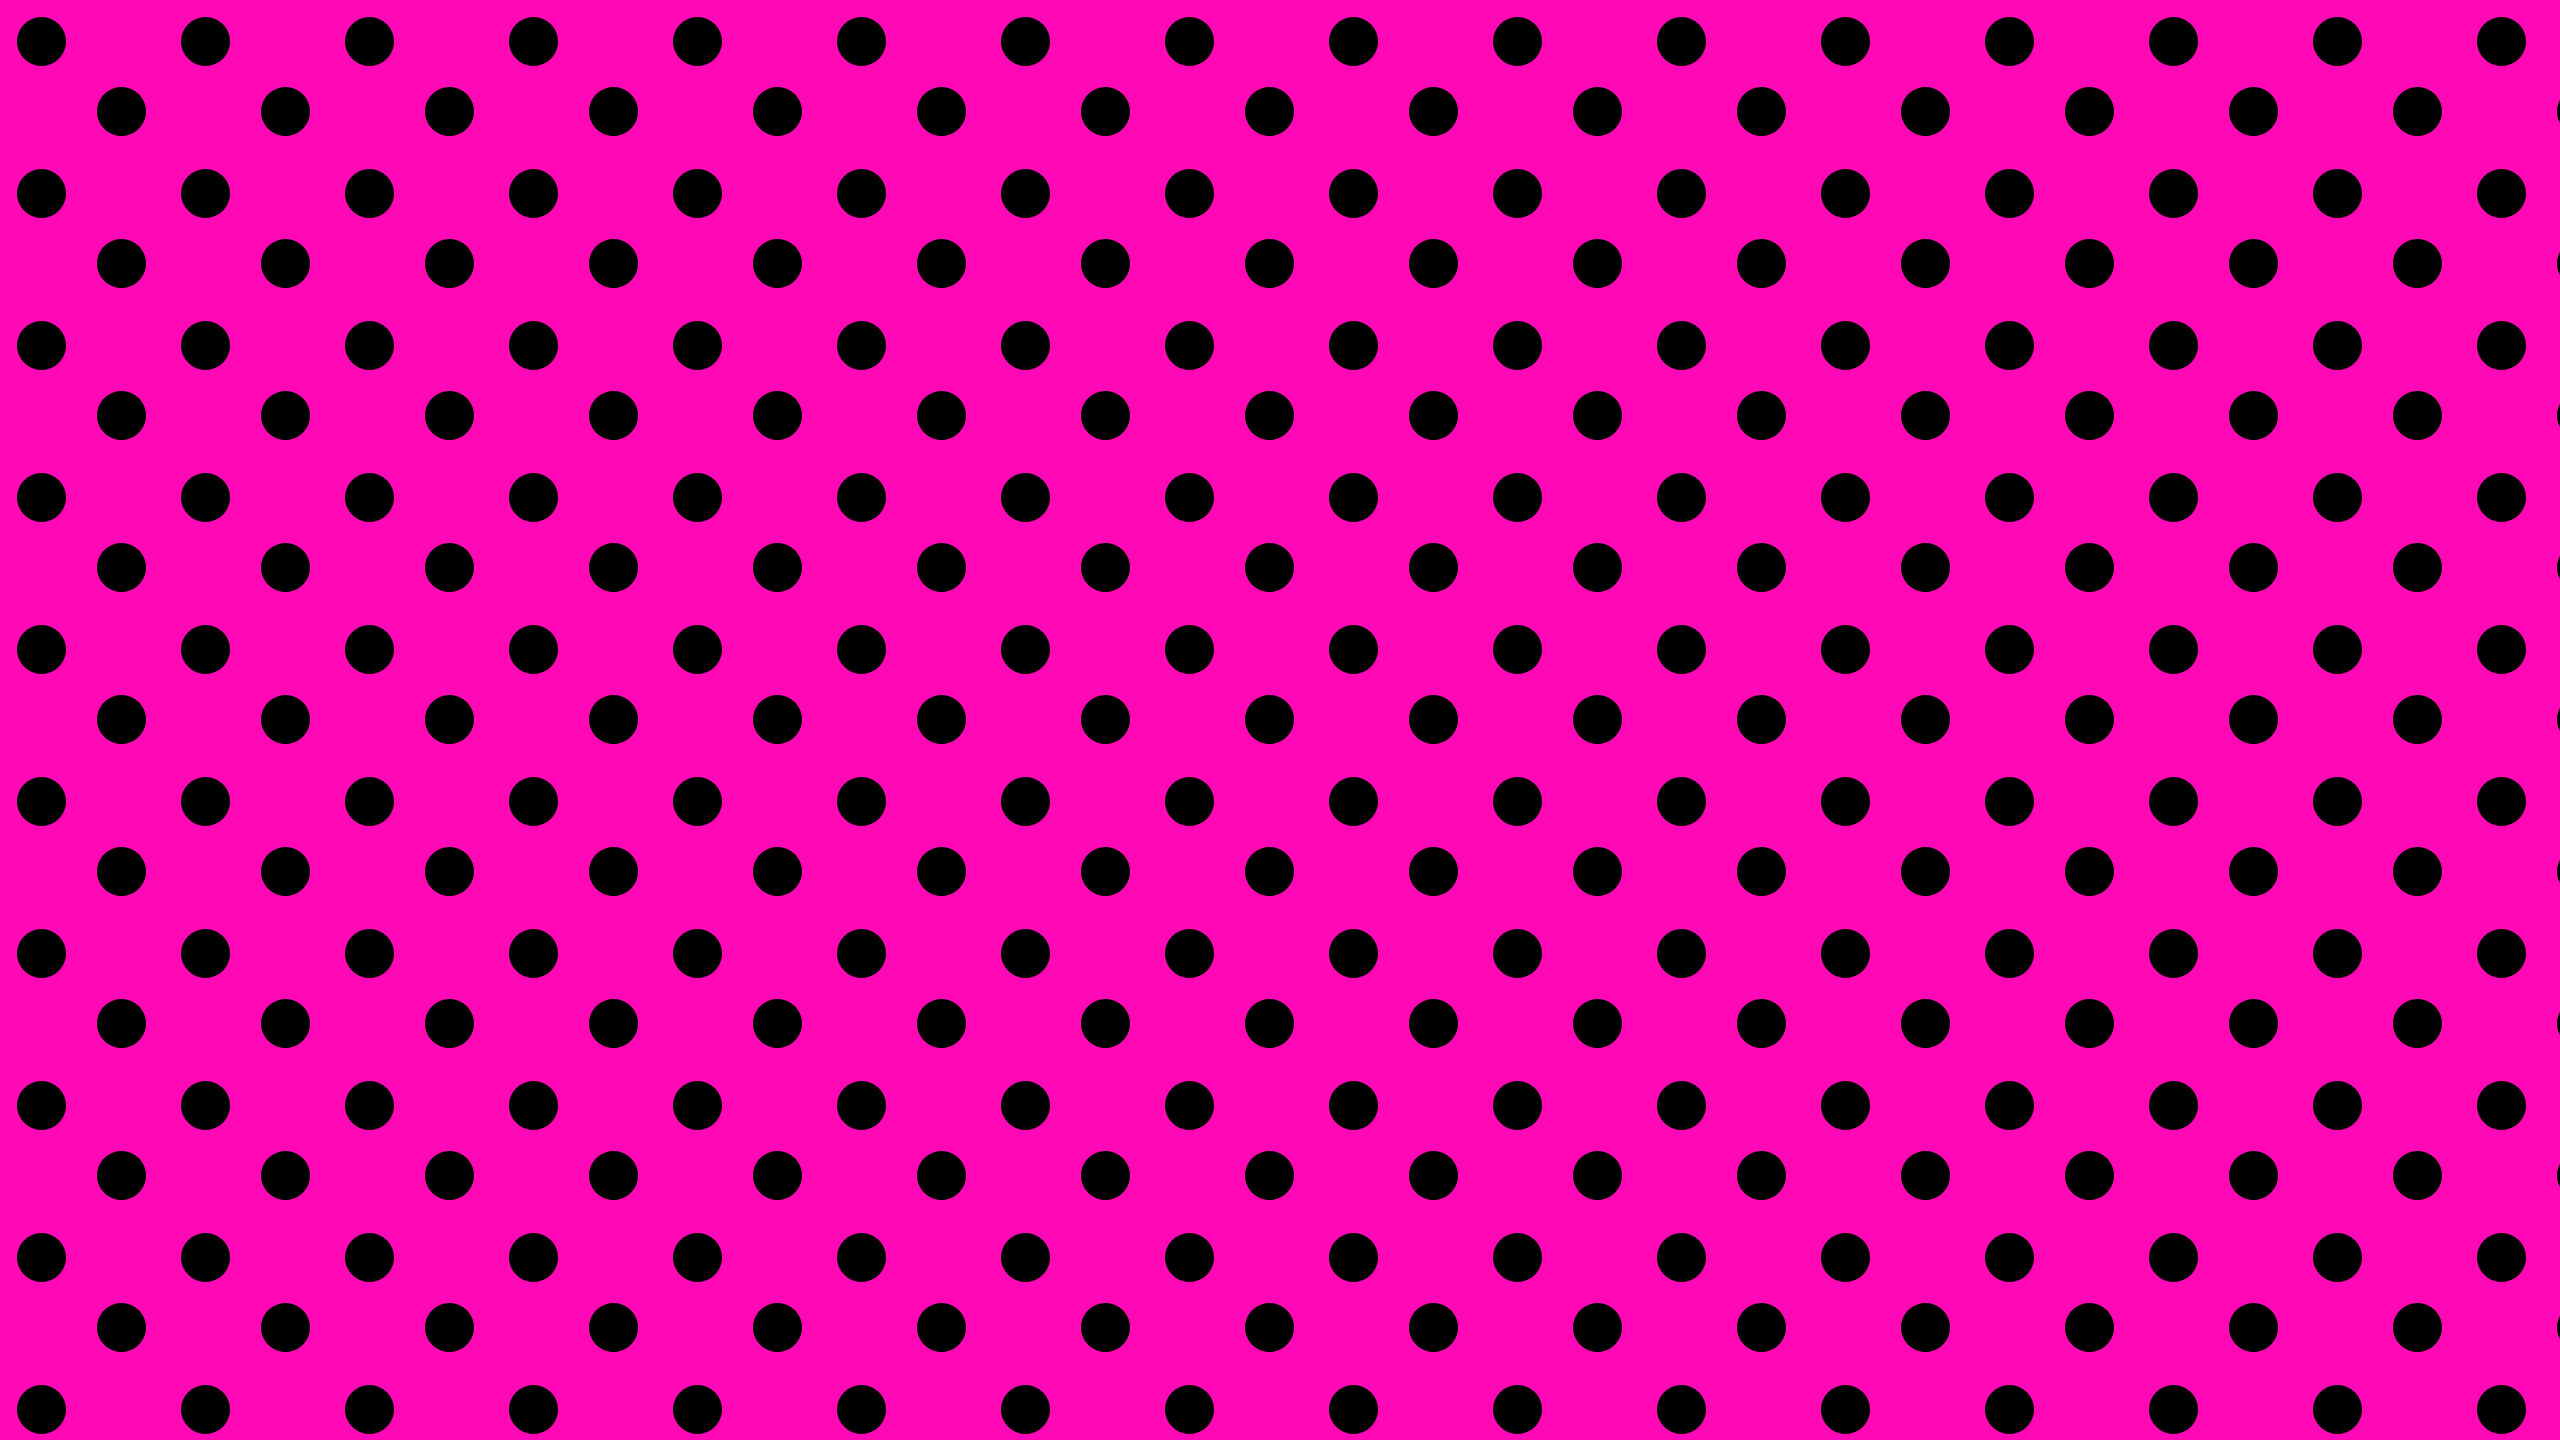 Large Pink Black Desktop Wallpaper is easy. Just save the wallpaper